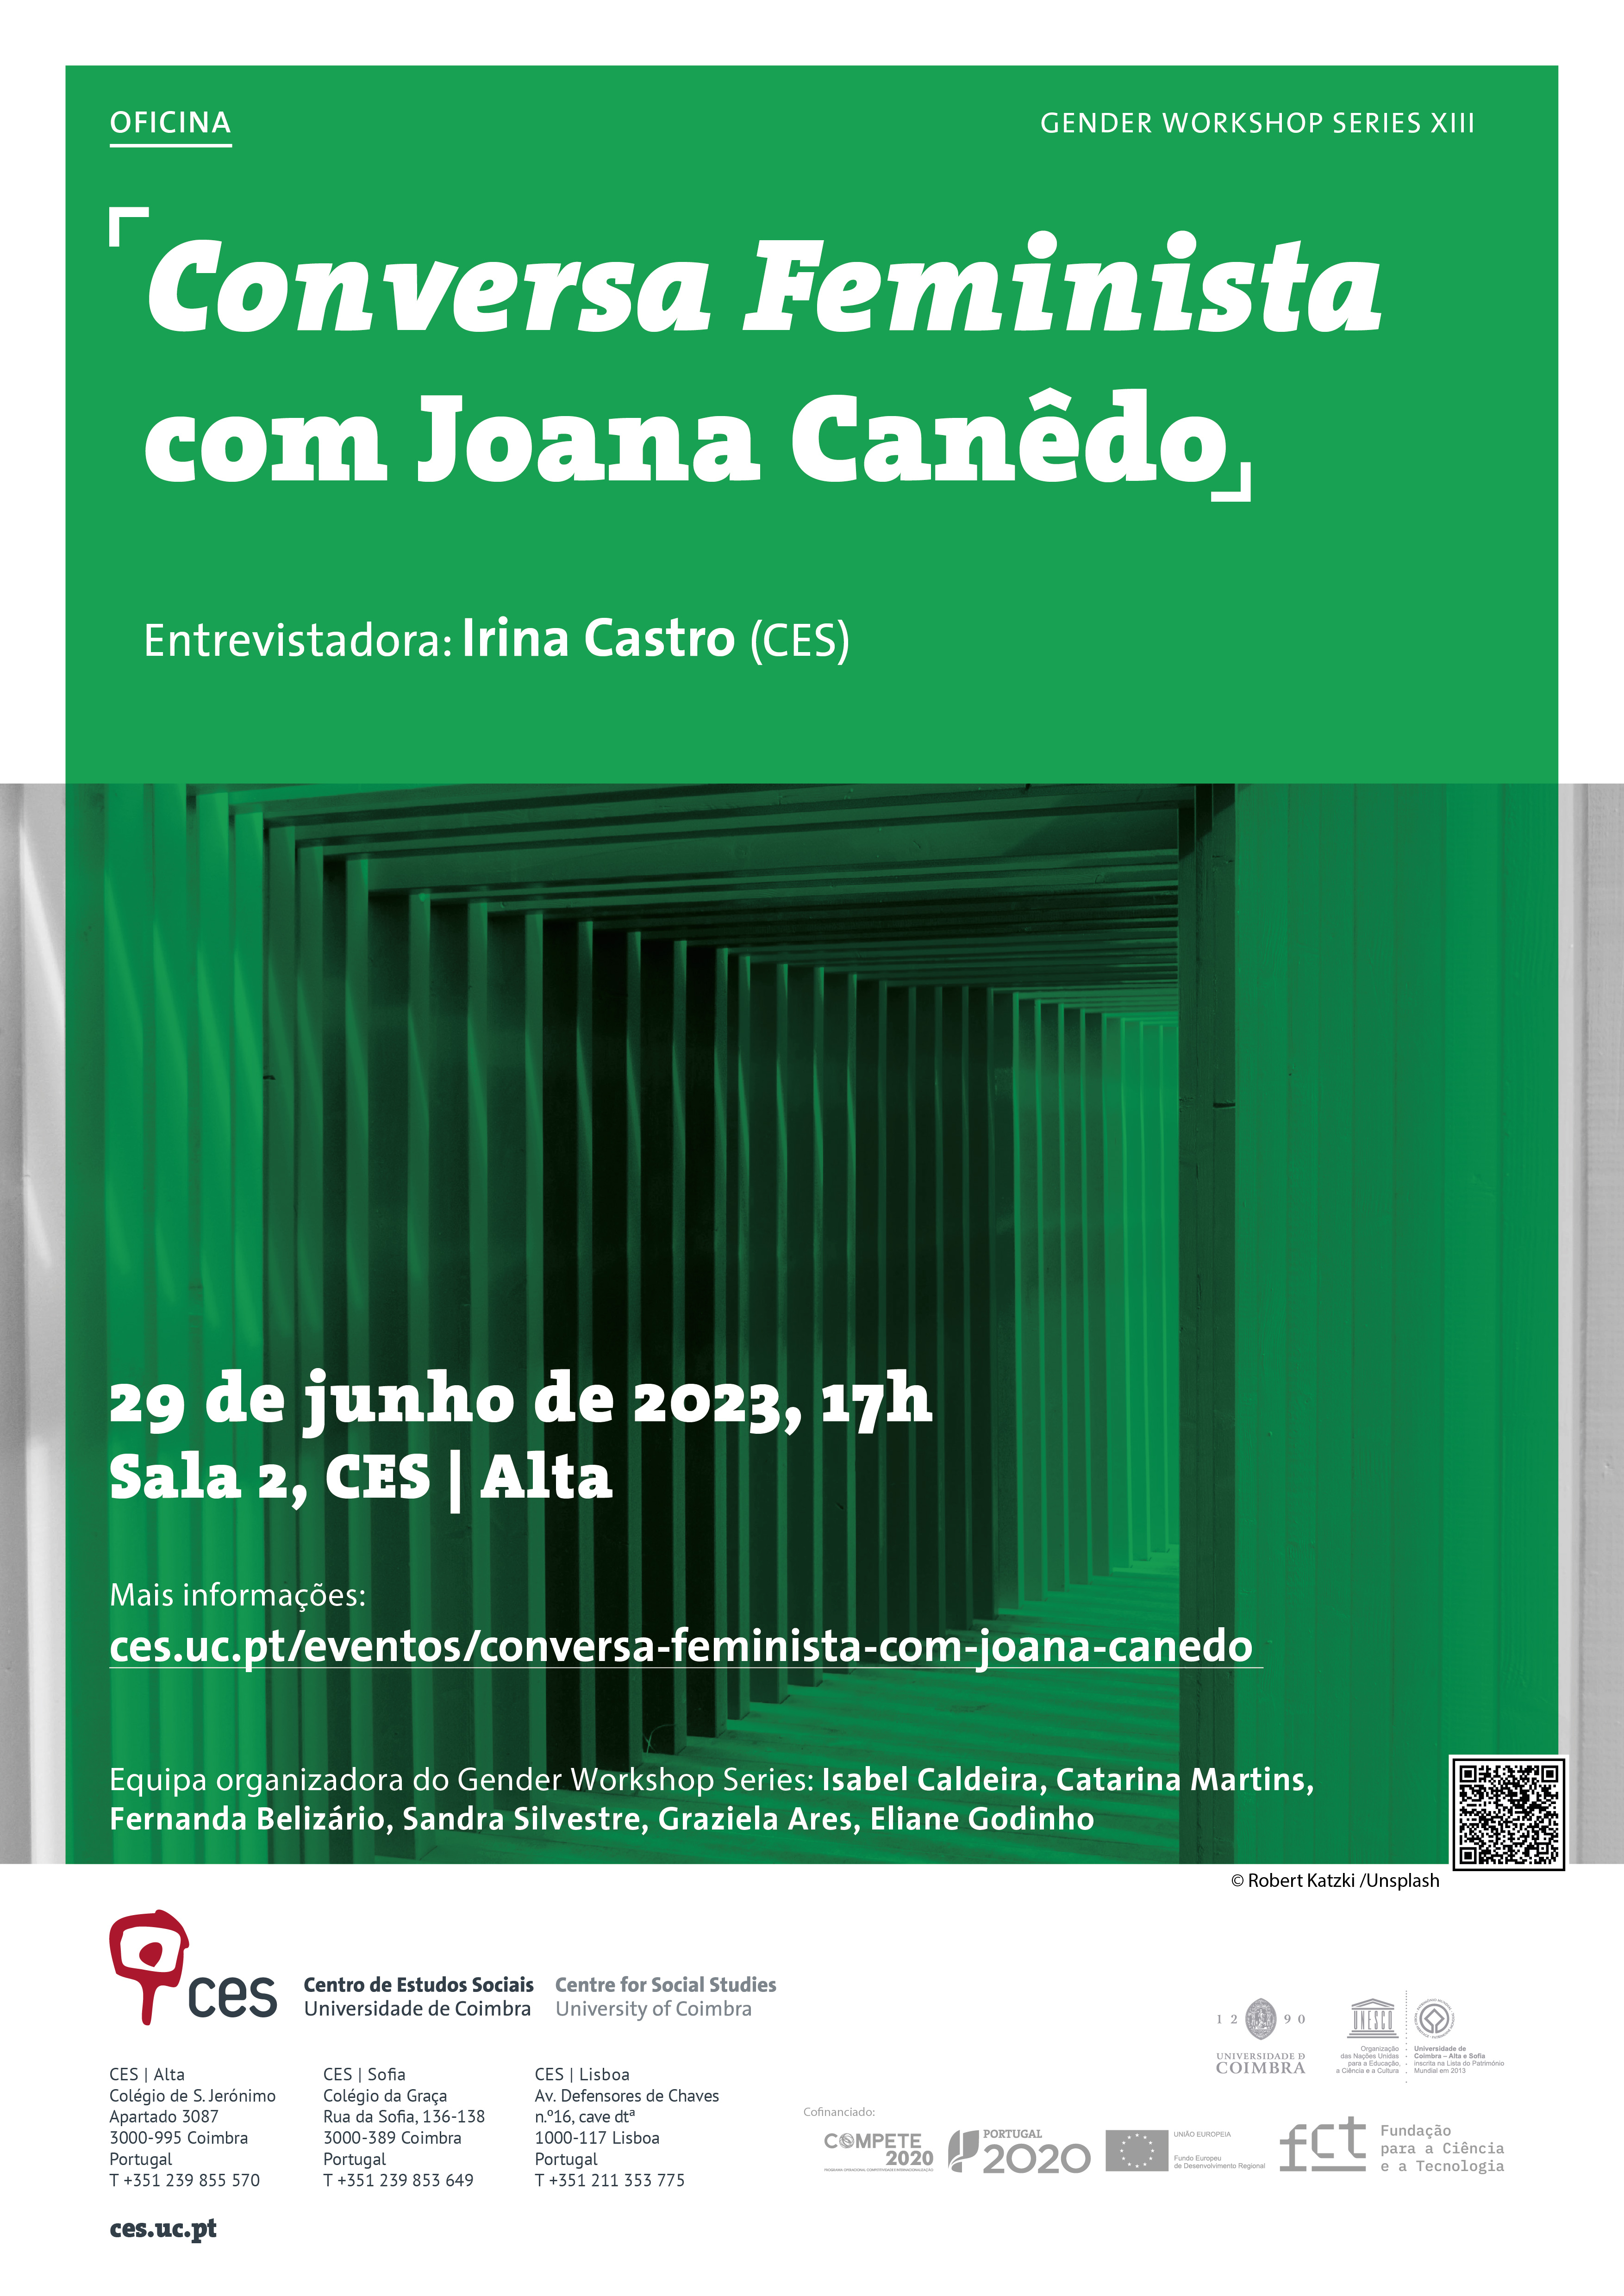 <em>Feminist Talk</em> with Joana Canêdo<span id="edit_41623"><script>$(function() { $('#edit_41623').load( "/myces/user/editobj.php?tipo=evento&id=41623" ); });</script></span>